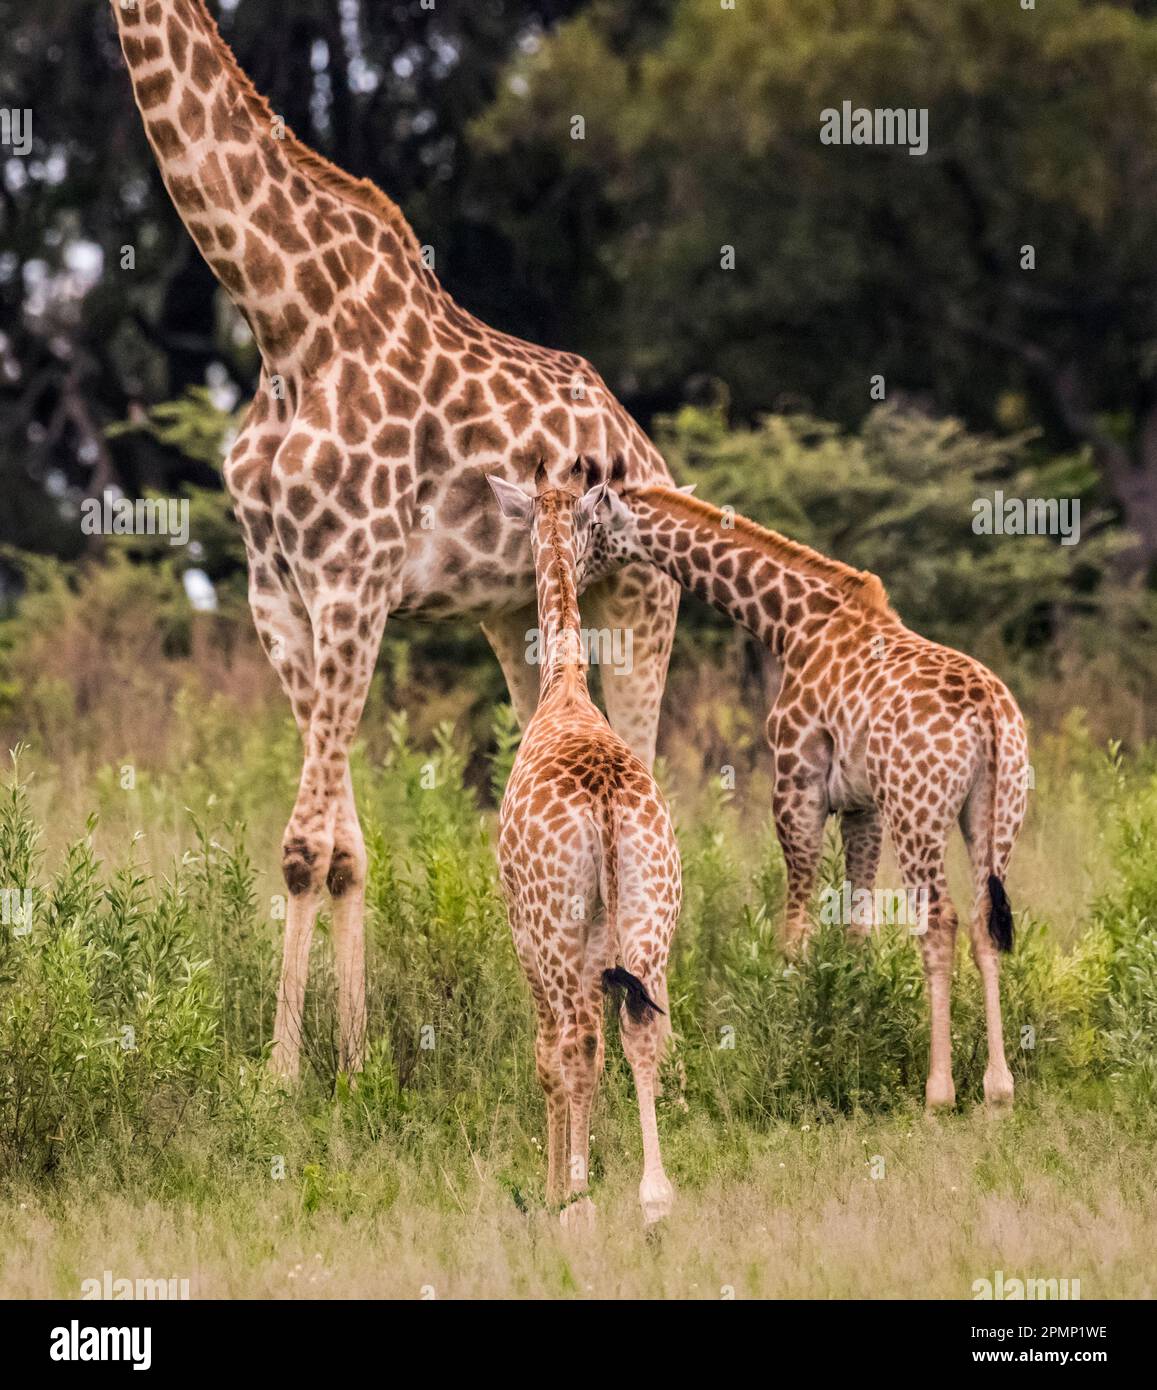 Female giraffe with twins, which is unusual, in the wetlands; Okavango Delta, Botswana Stock Photo